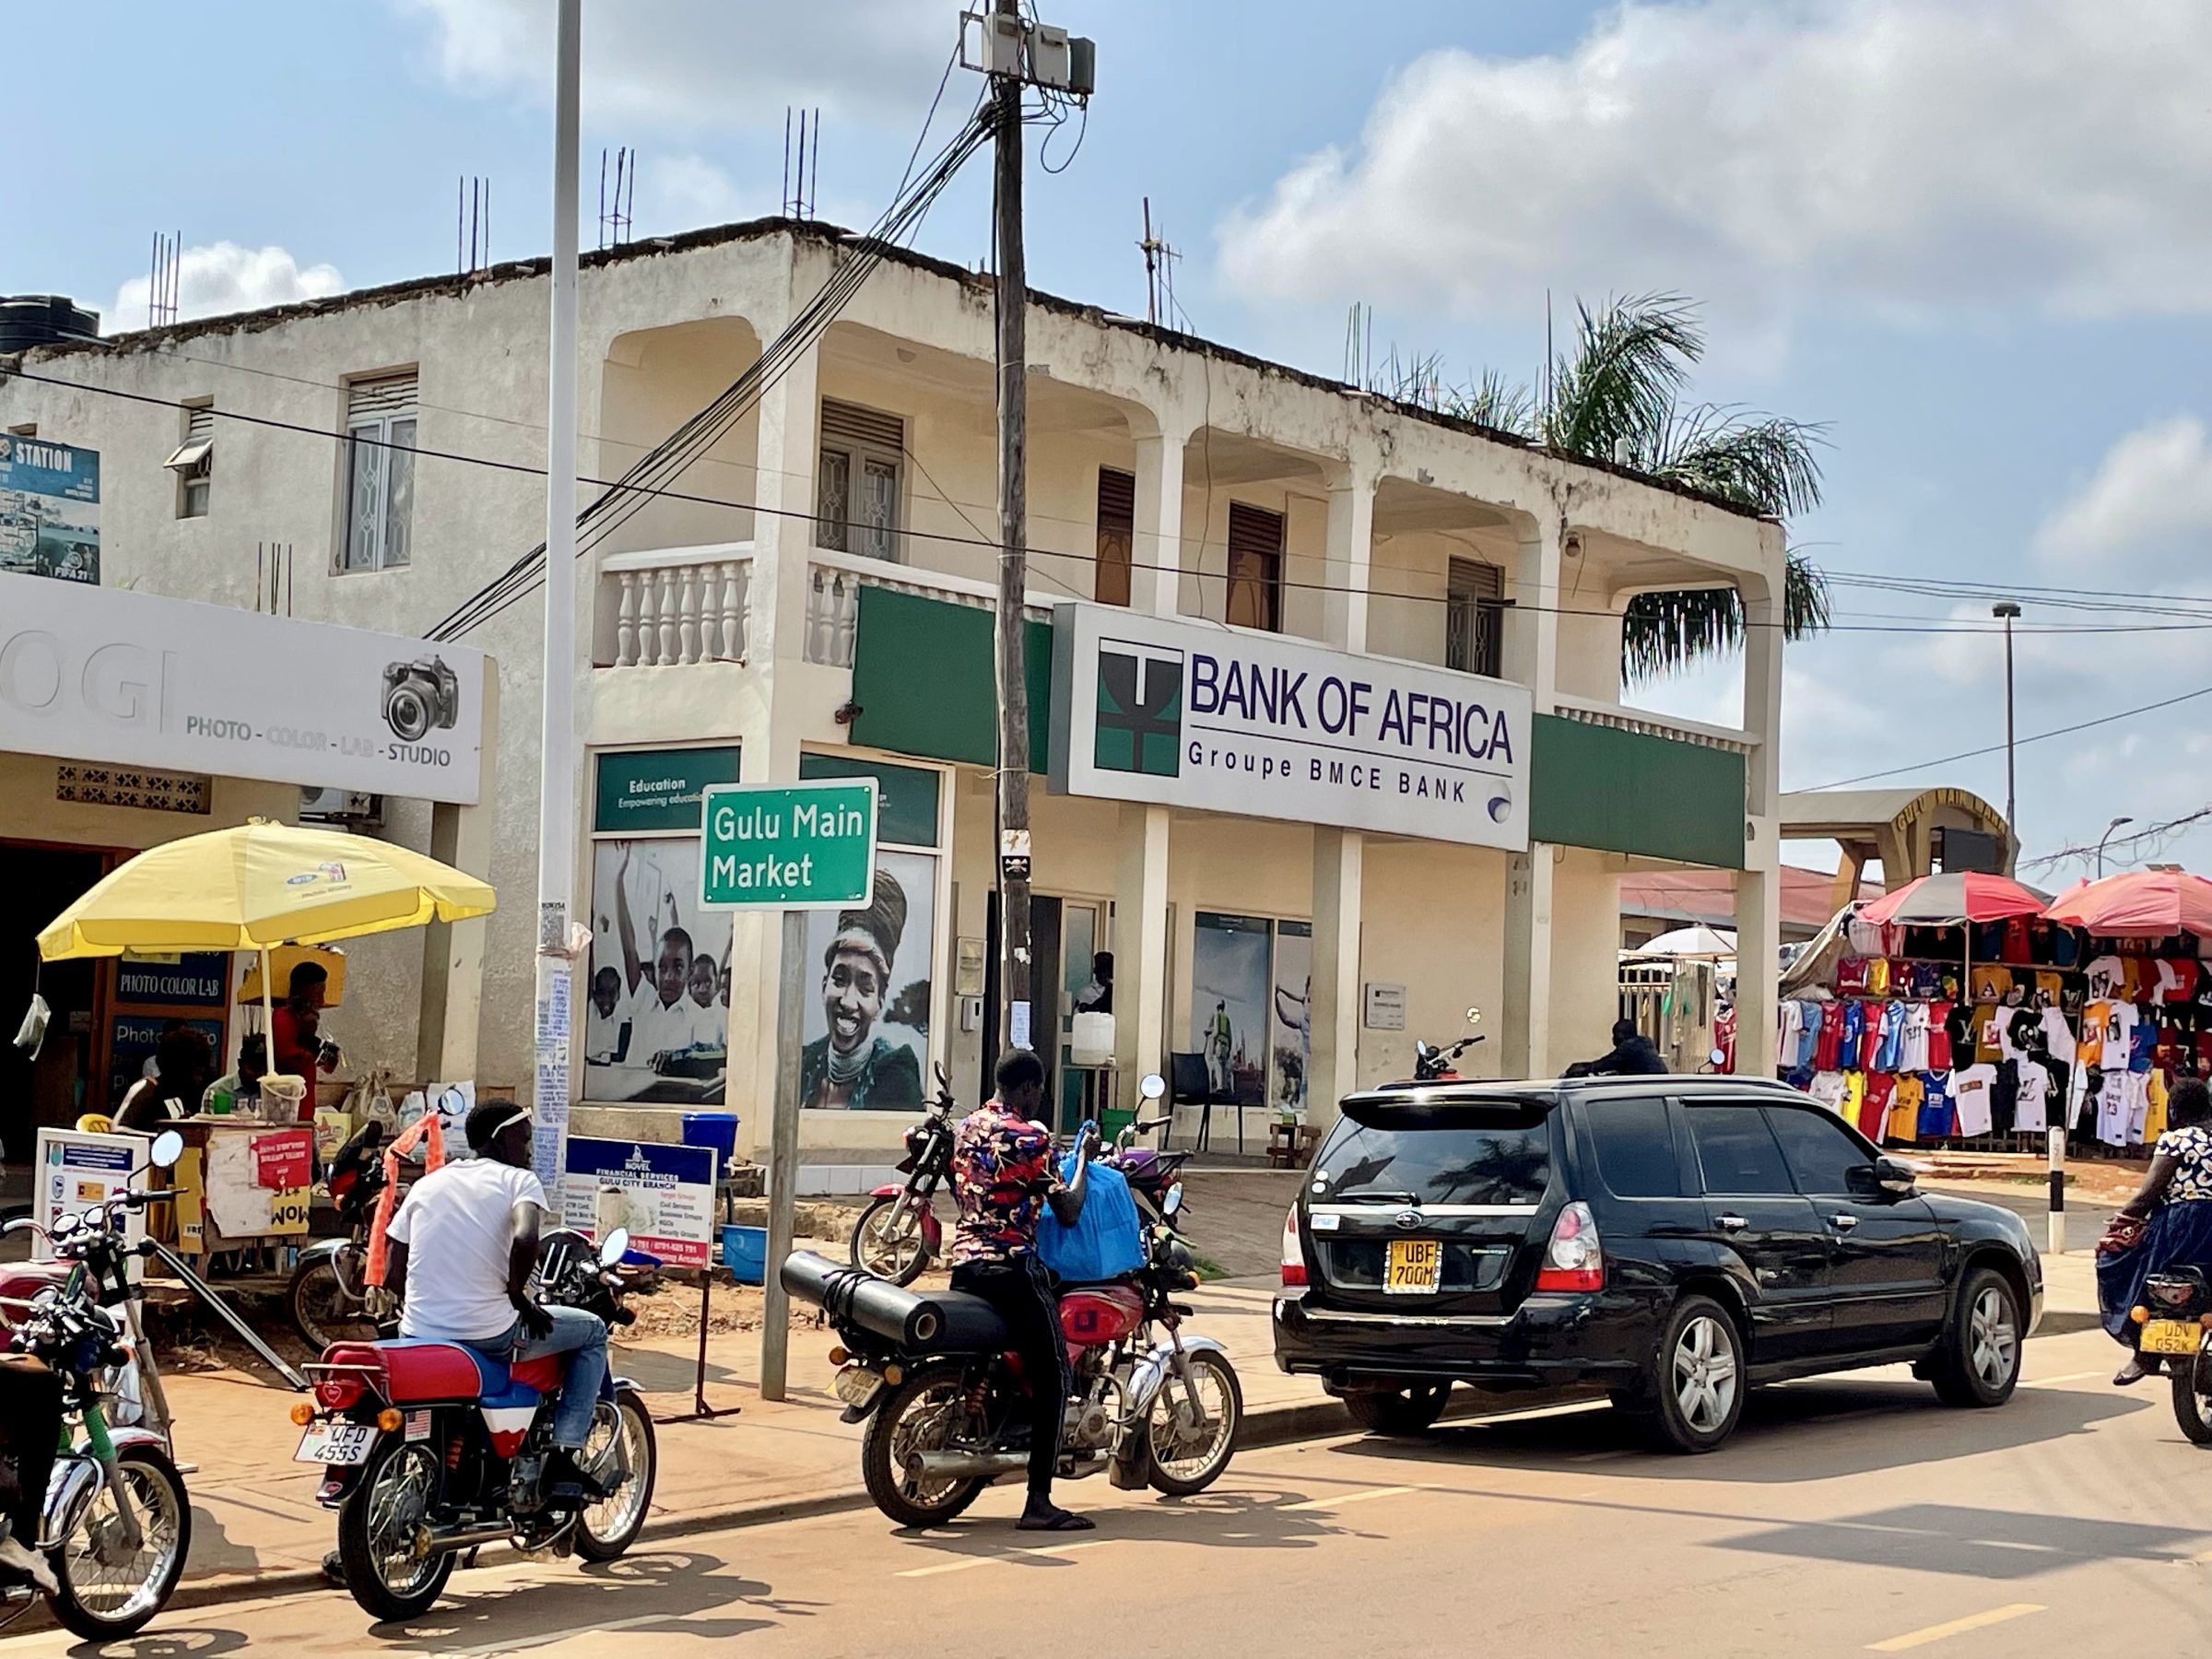 Bank Of Africa, Gulu Main Market